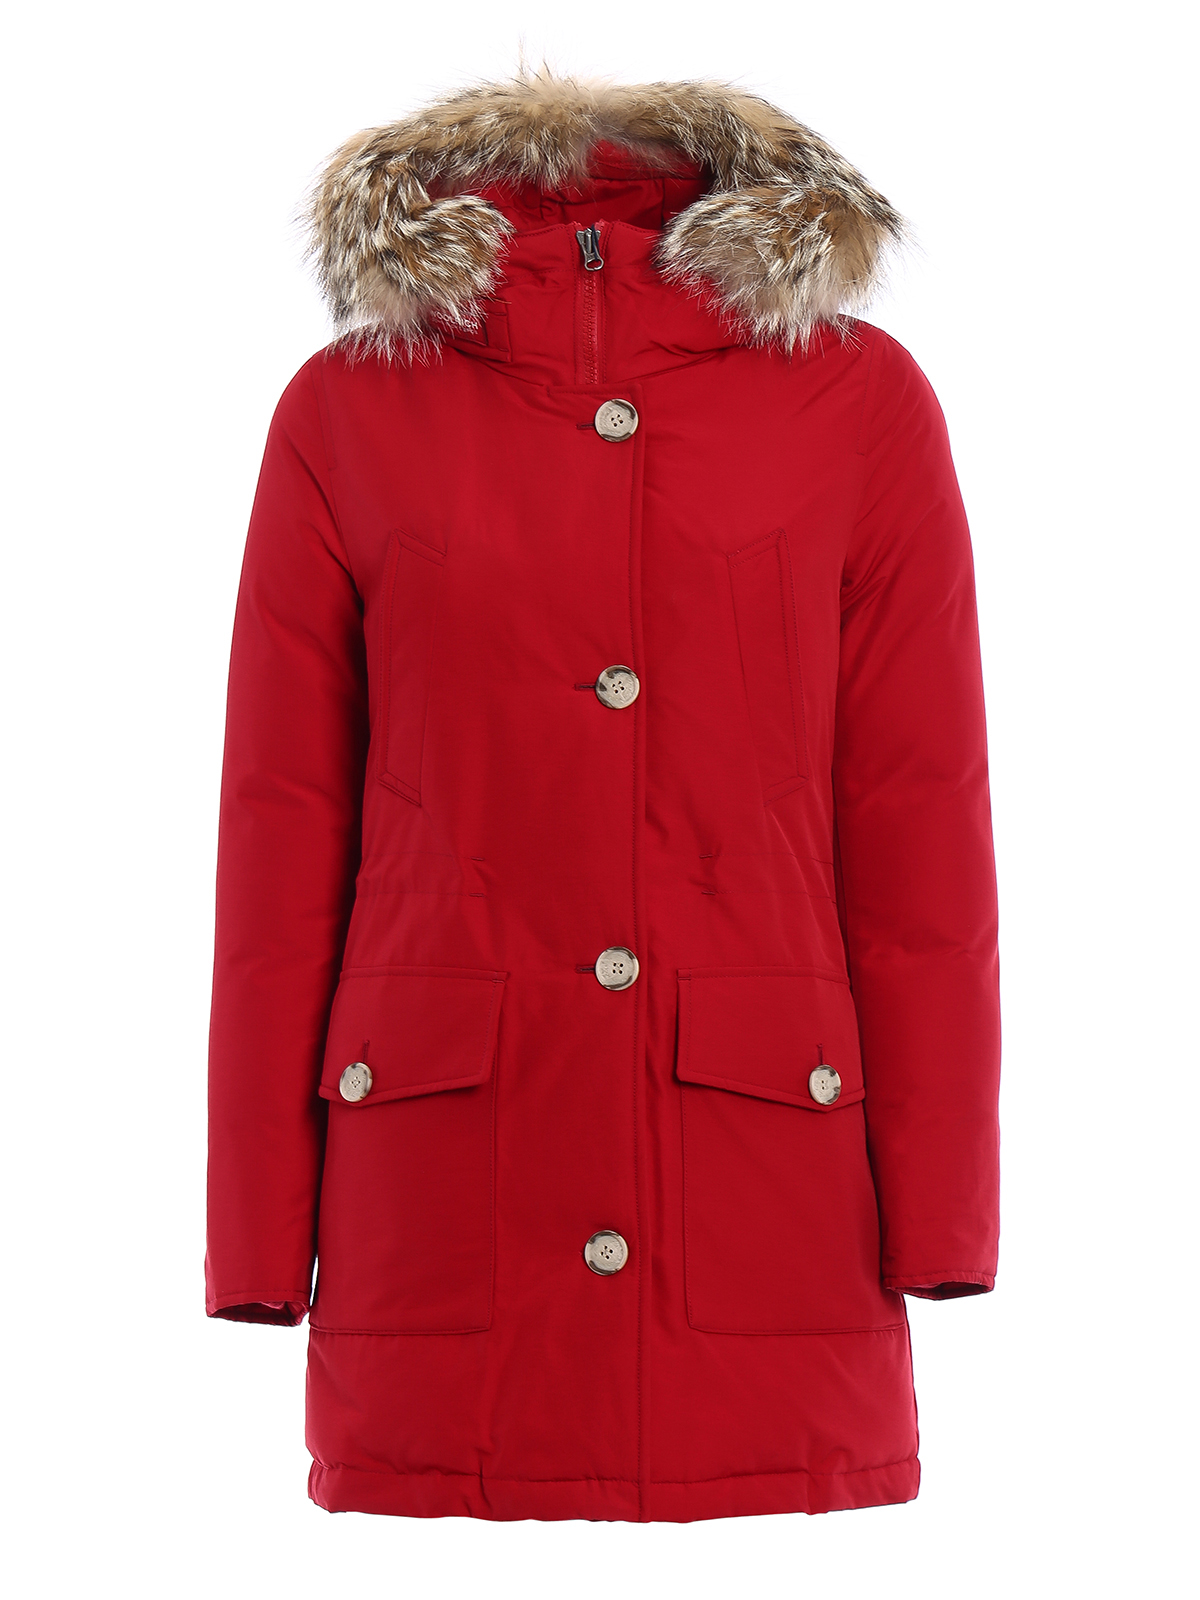 Artik Parka HC padded coat by Woolrich - padded coats | iKRIX